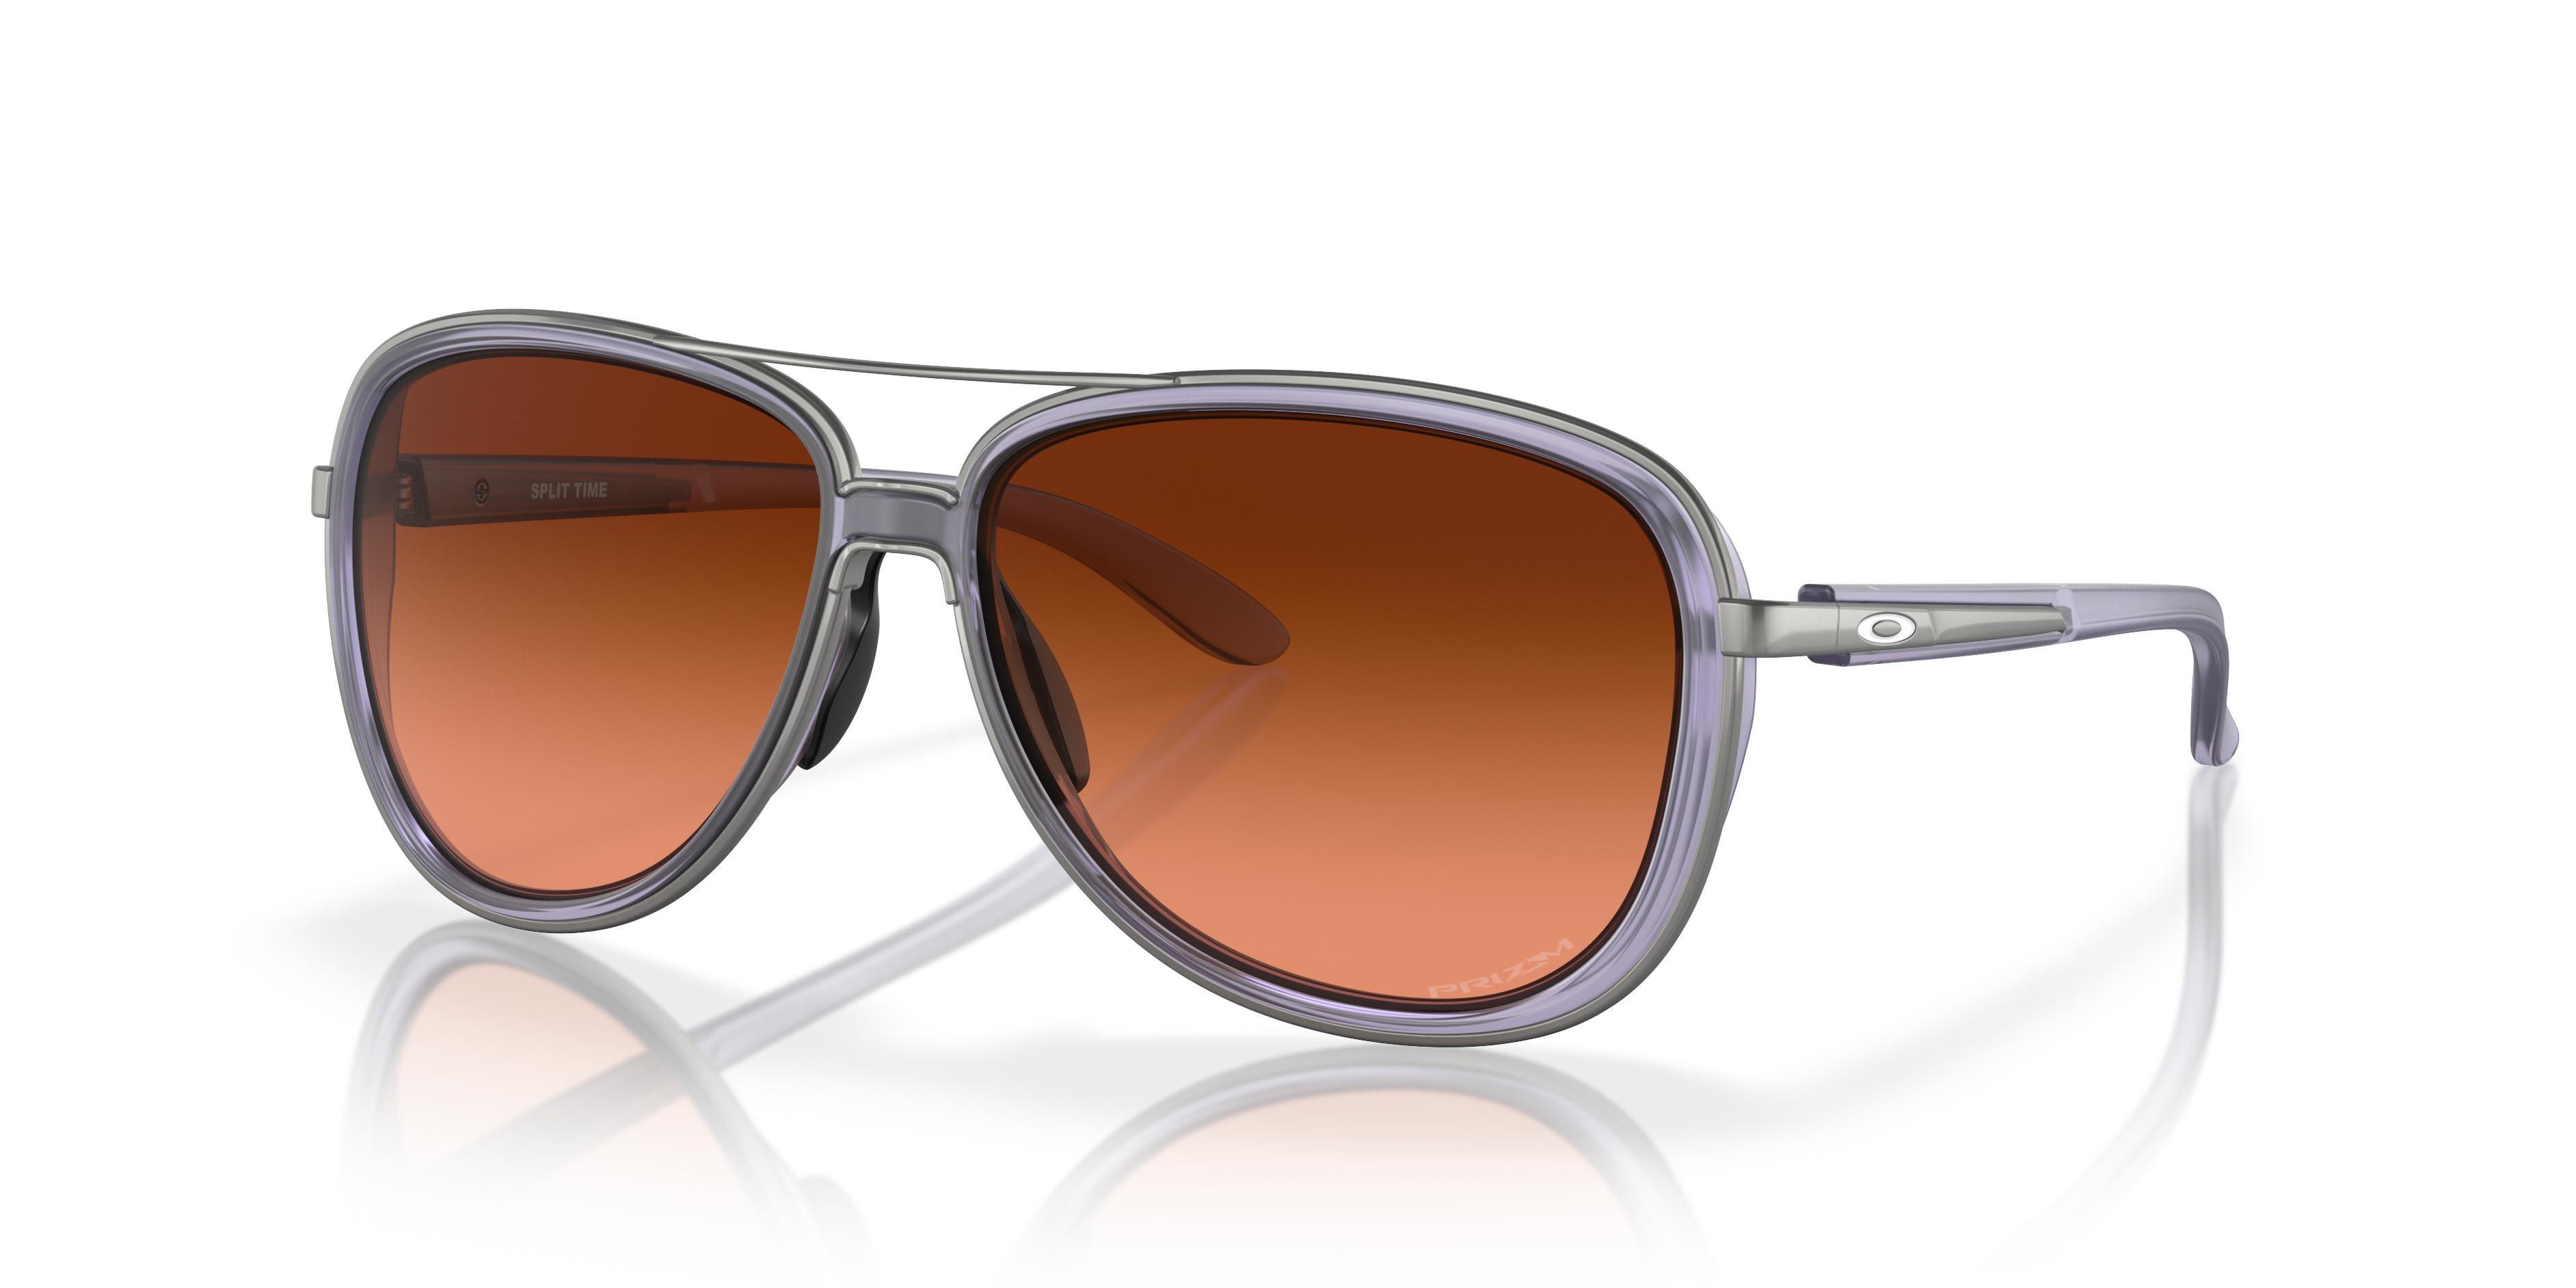 Oakley Women's Split Time Sunglasses Product Image